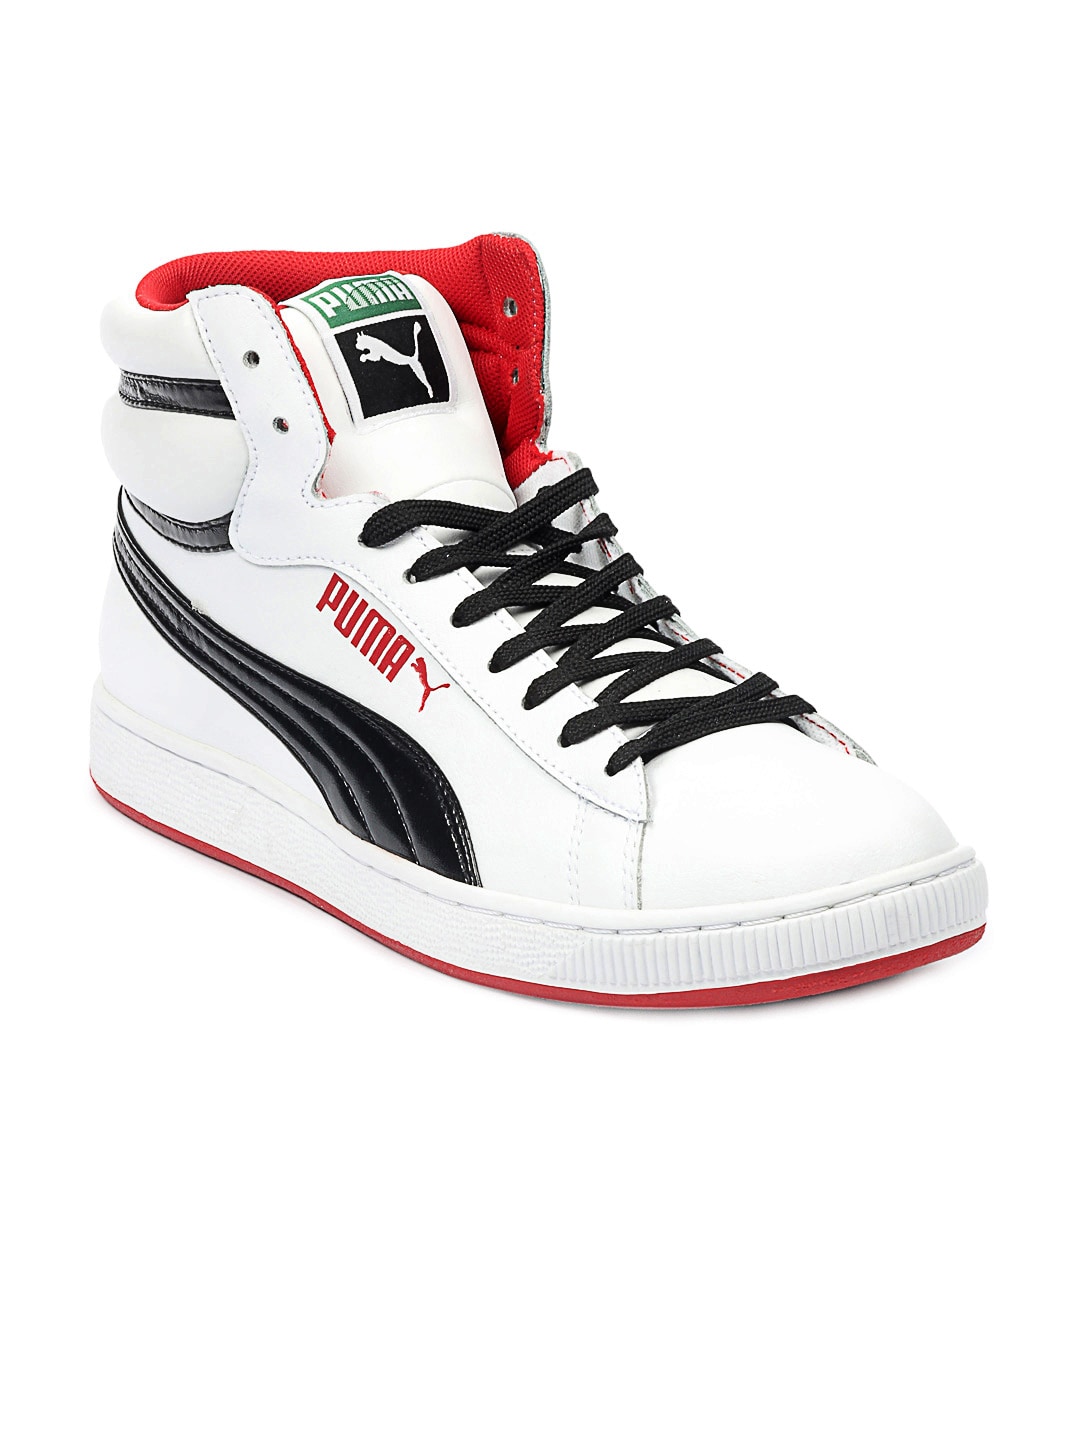 Puma Men White RS Hi Leather Shoes